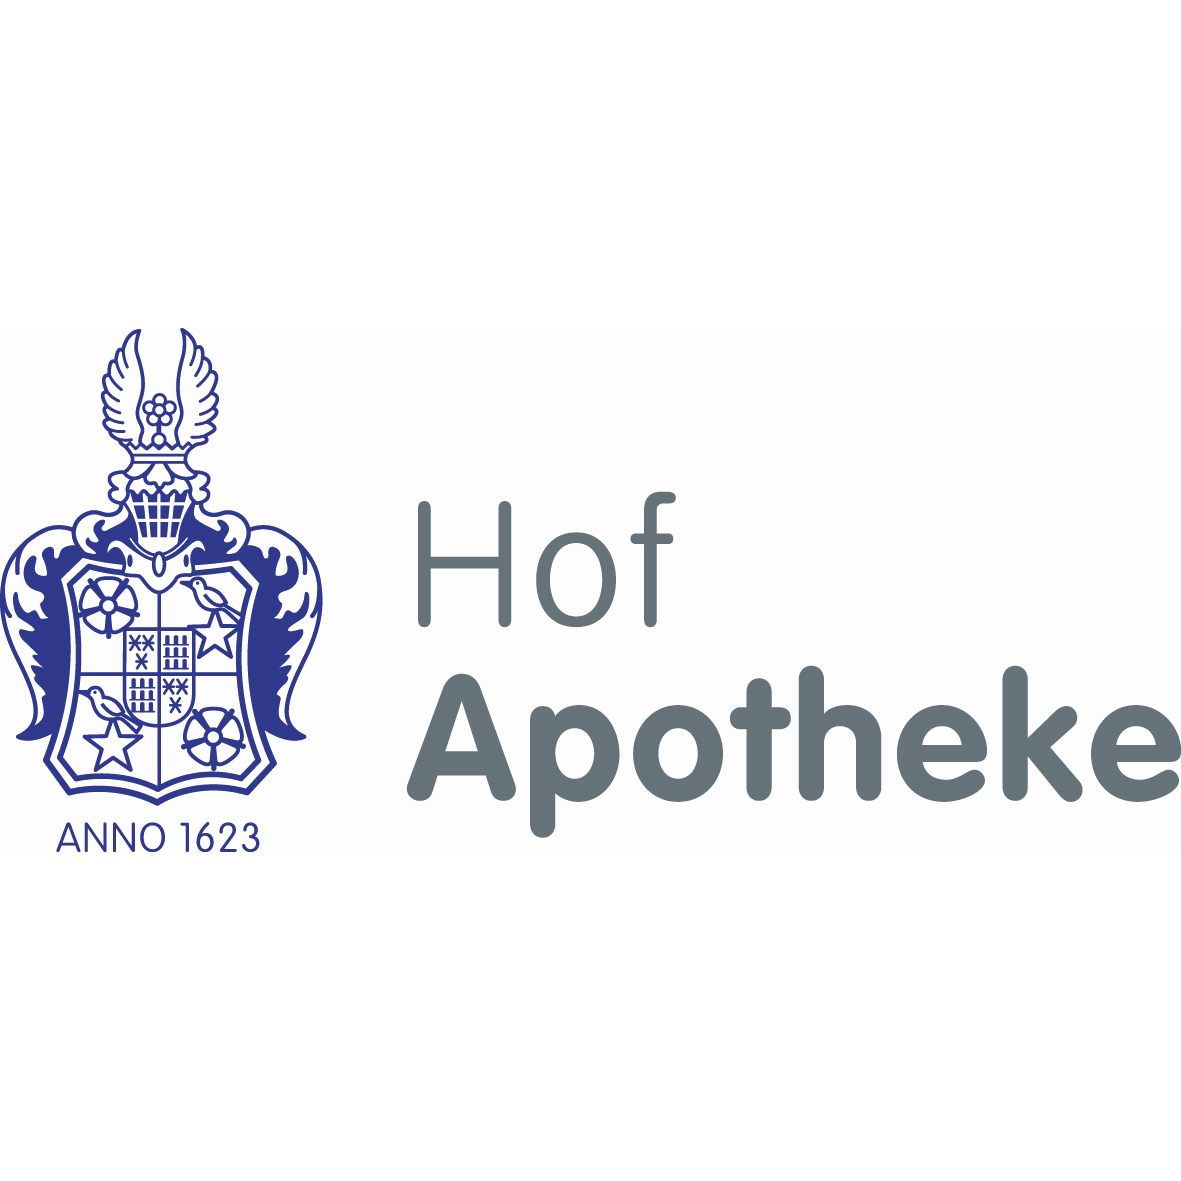 Hof-Apotheke in Detmold - Logo